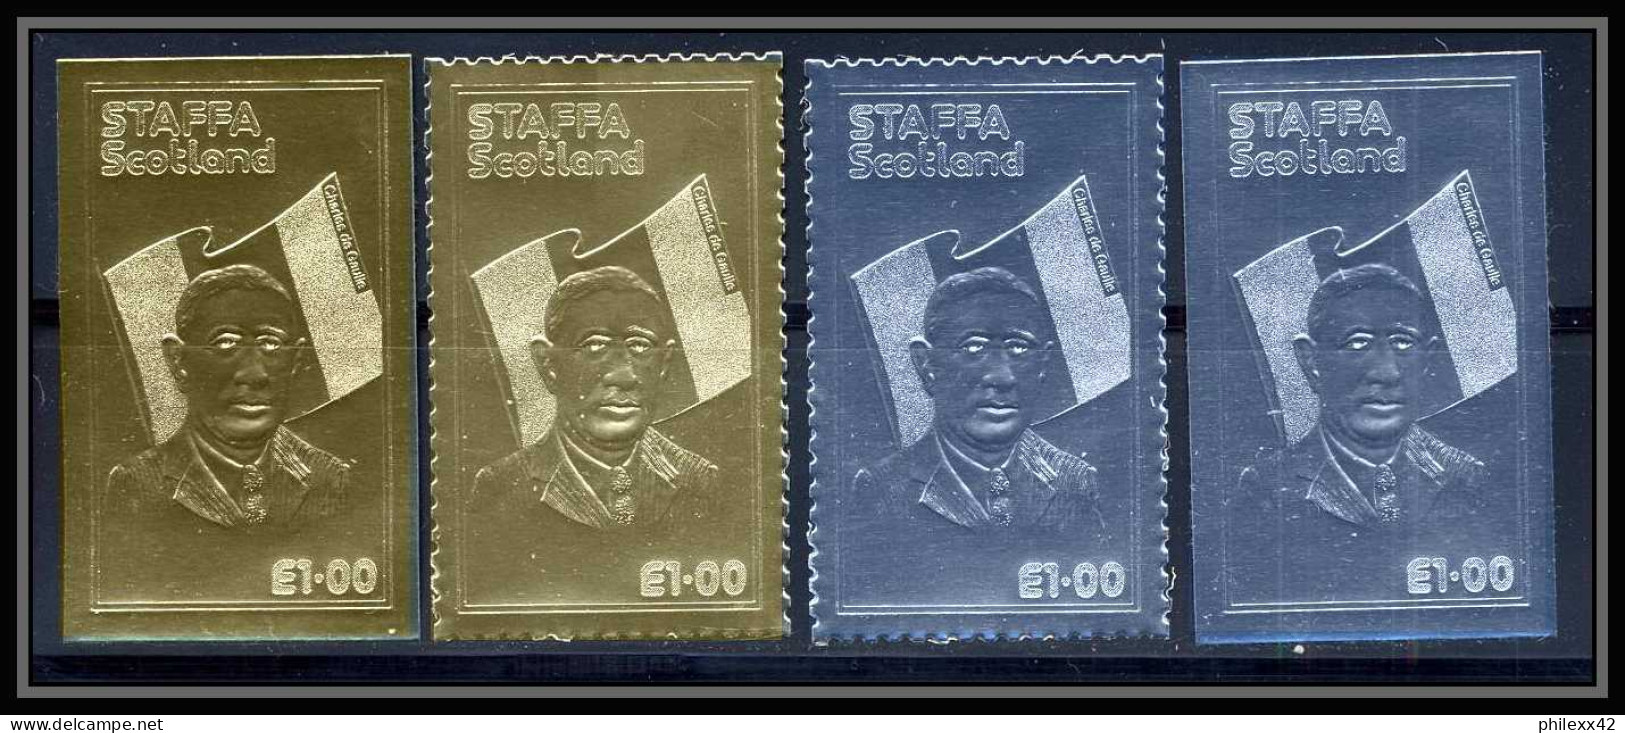 166a Charles De Gaulle UK 4 Timbres Série Complète Argent (Silver) OR (gold Stamps)  - Ortsausgaben